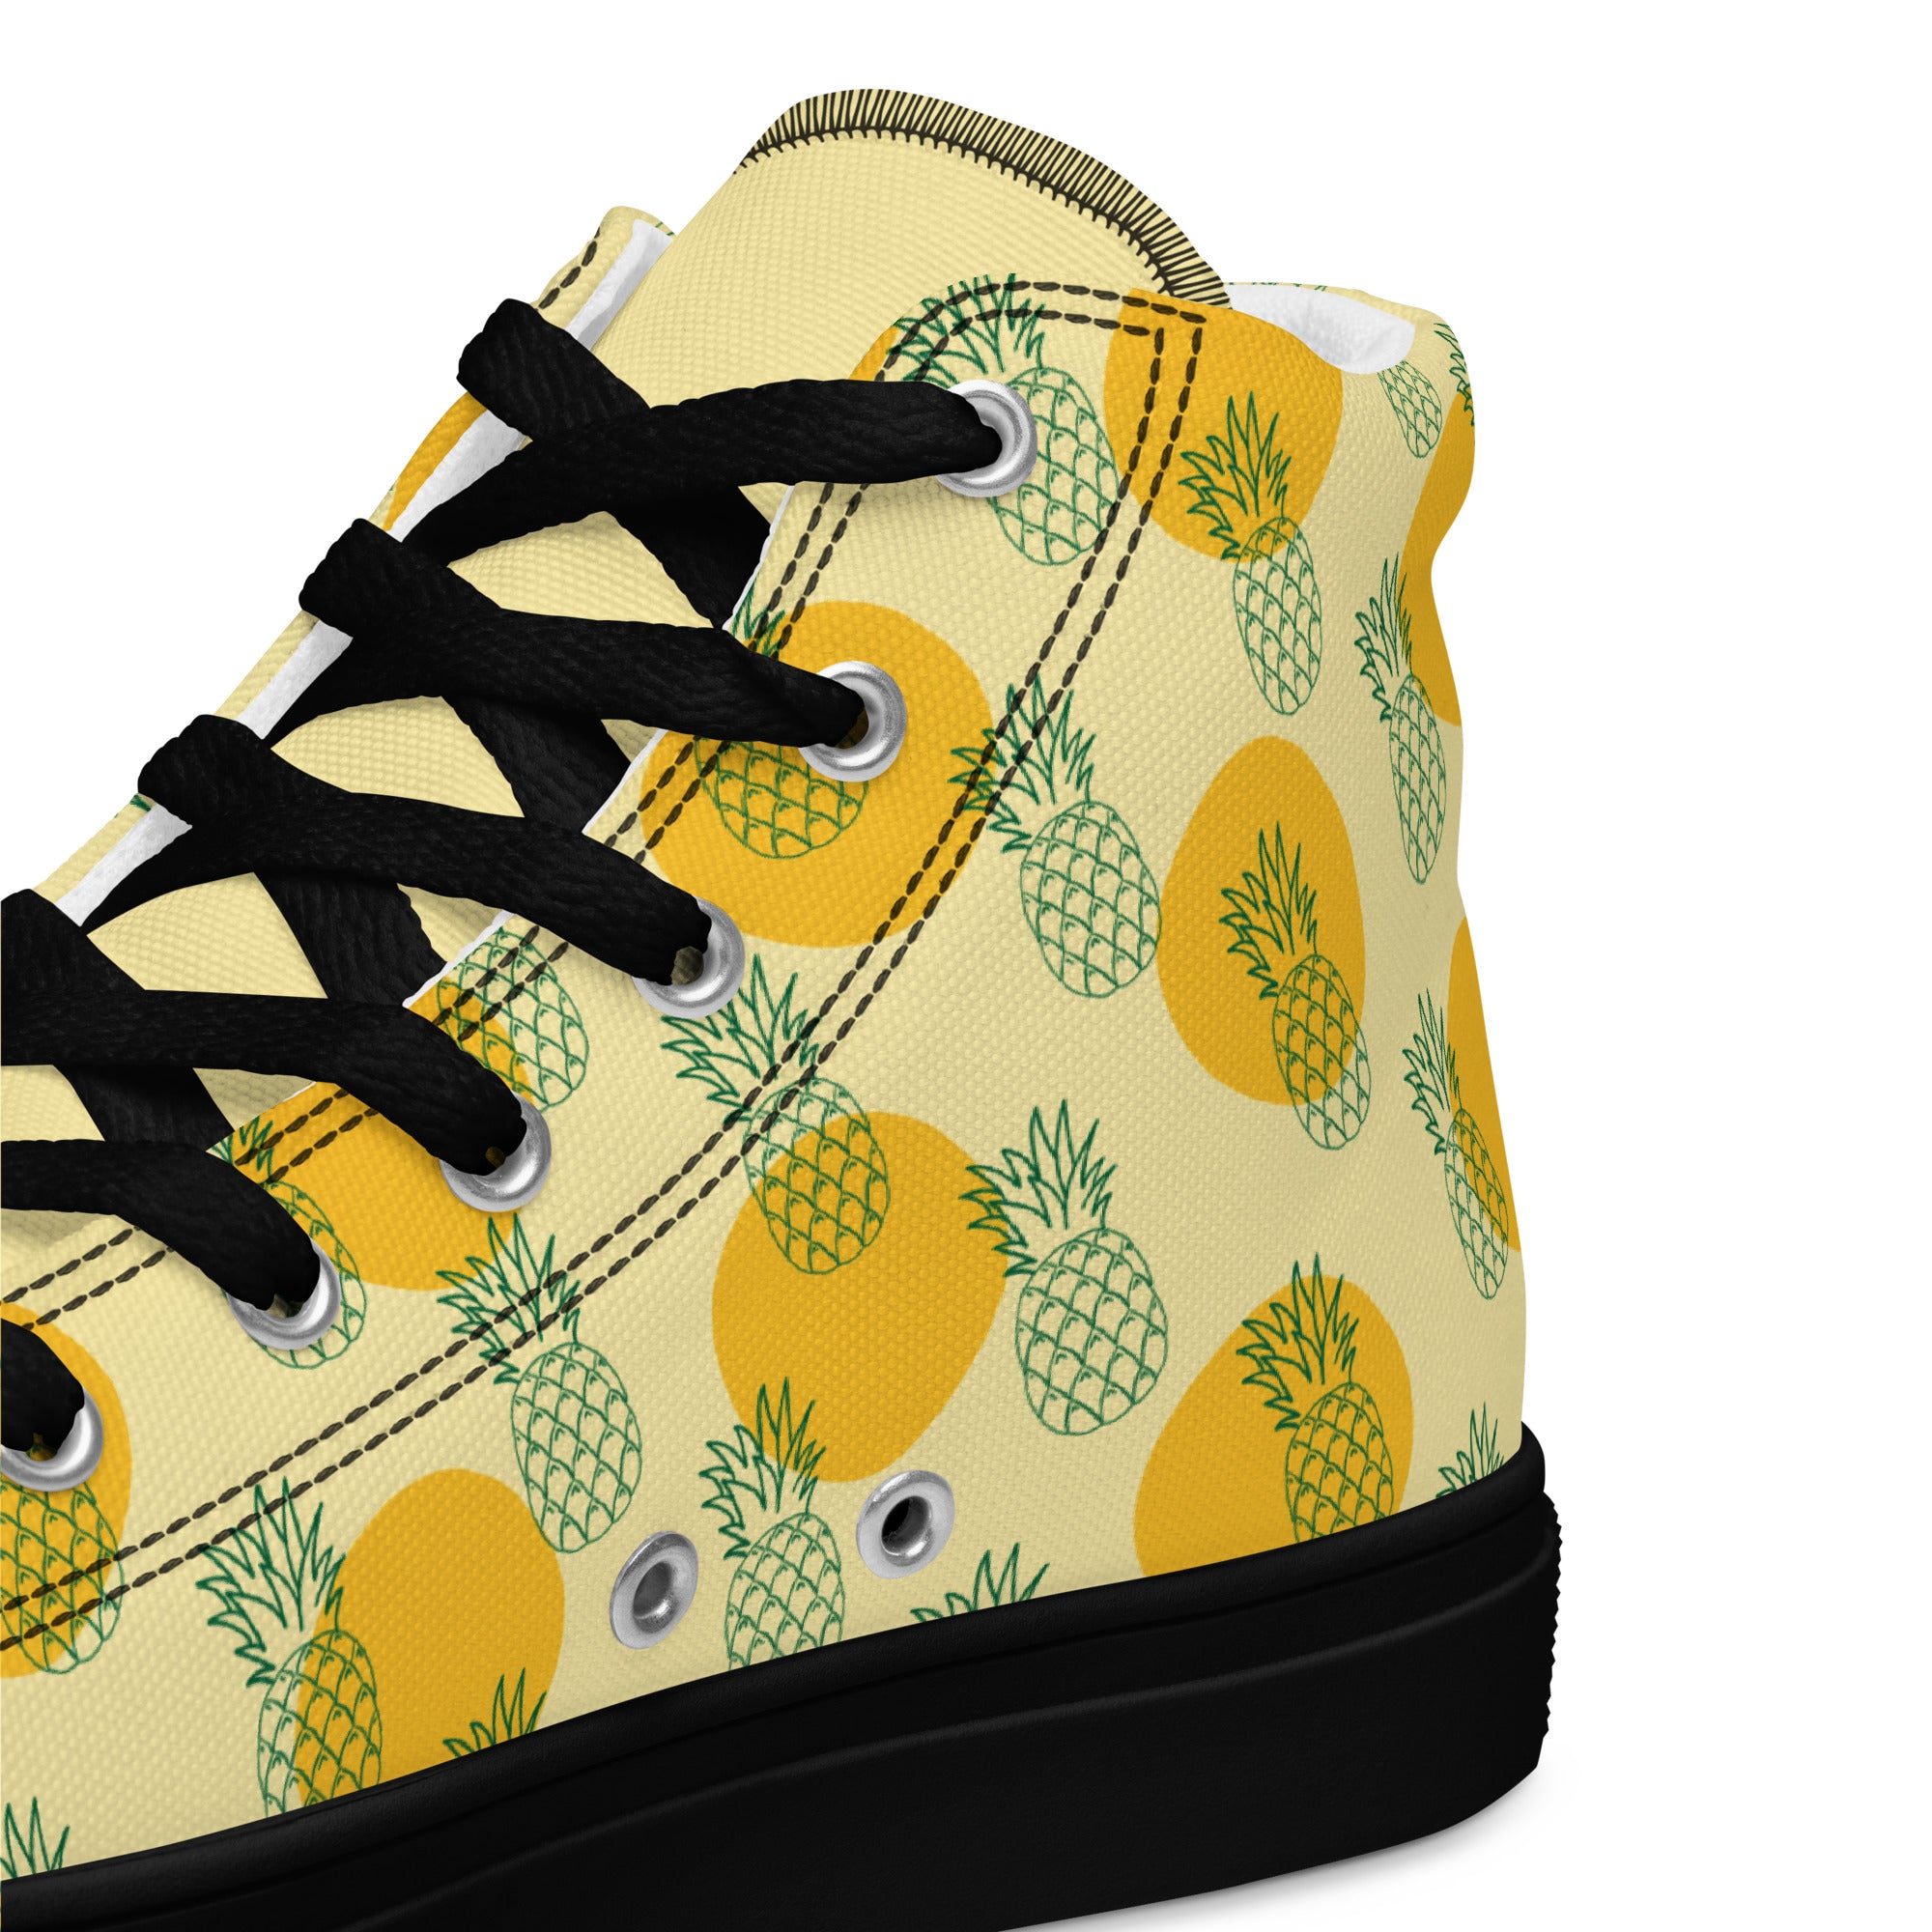 Chitelli's Pineapple Paradise Women's High Top Shoes